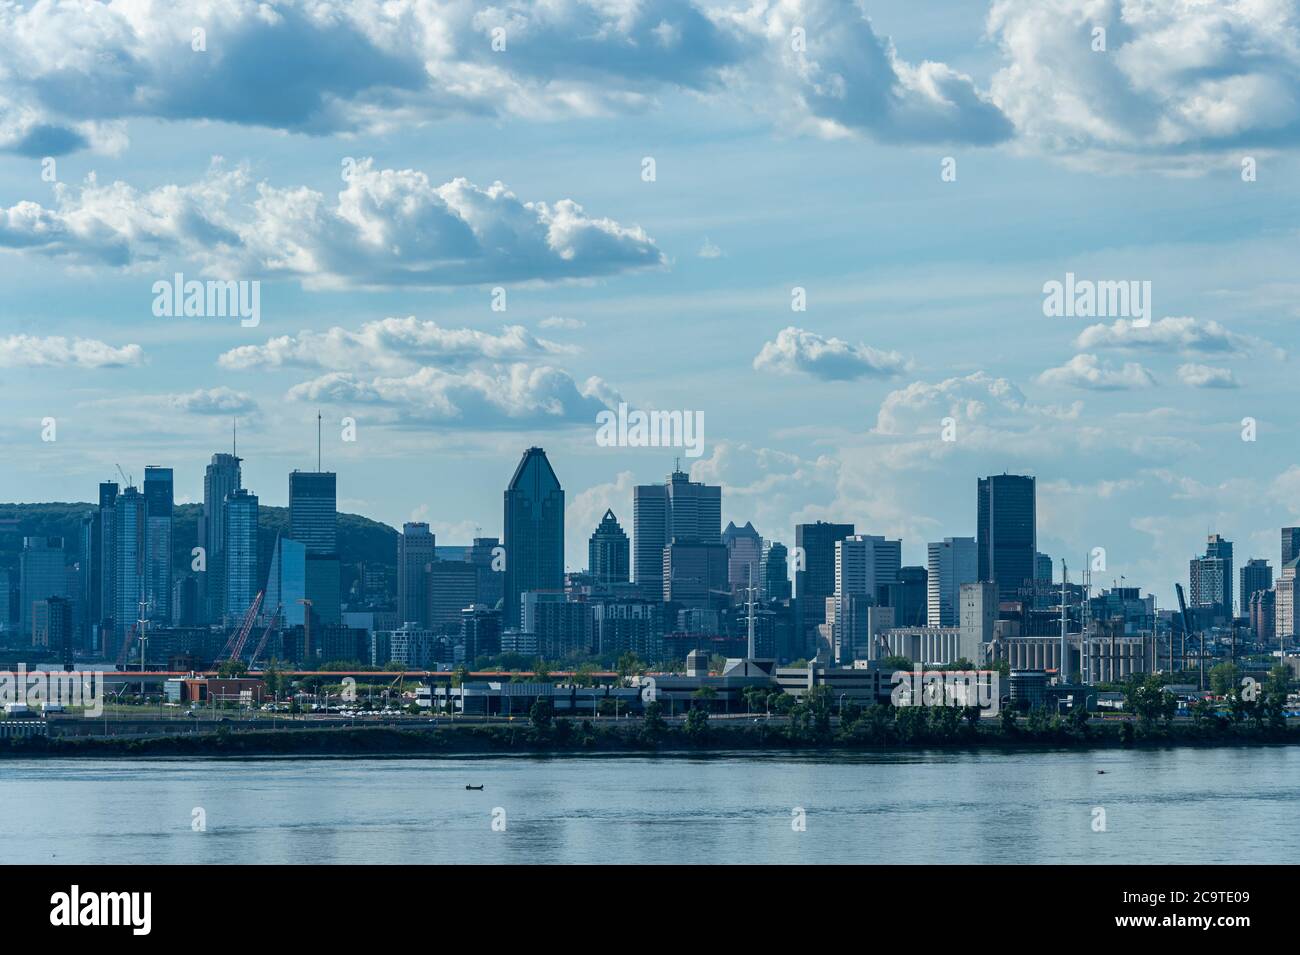 Montreal, CA - 31 July 2020: Montreal skyline from Samuel de Champlain bridge Stock Photo